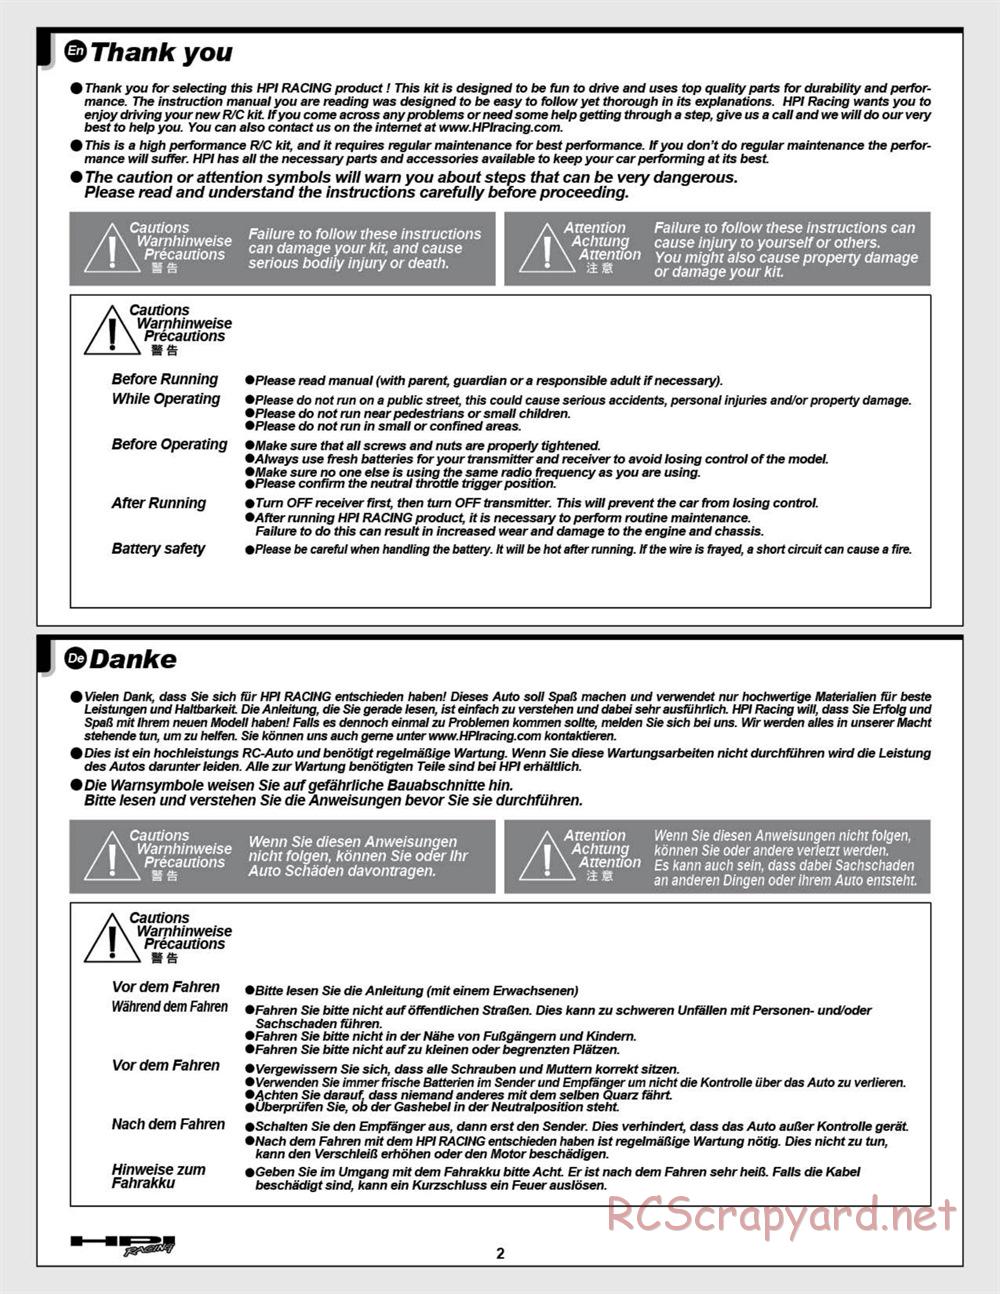 HPI - Brama 18B - Manual - Page 2